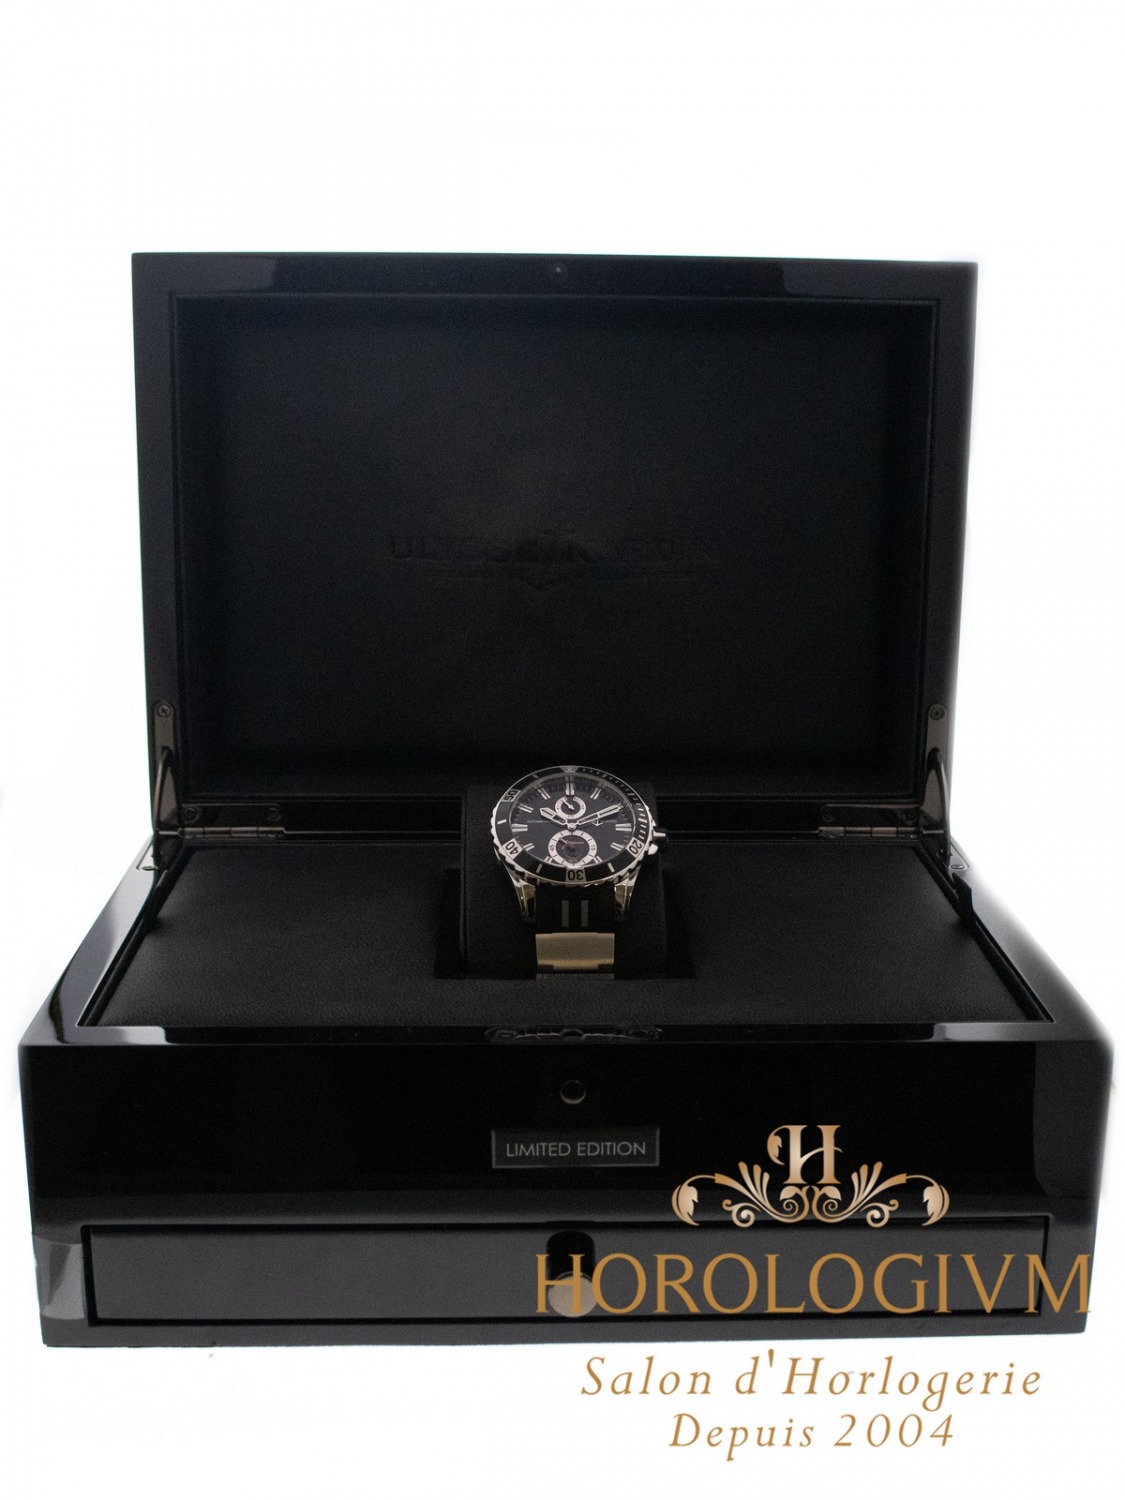 Ulysse Nardin Maxi Marine Diver Hispania Limited Edition 50 pcs Ref. 263-10 watch, silver (case) and black (bezel)